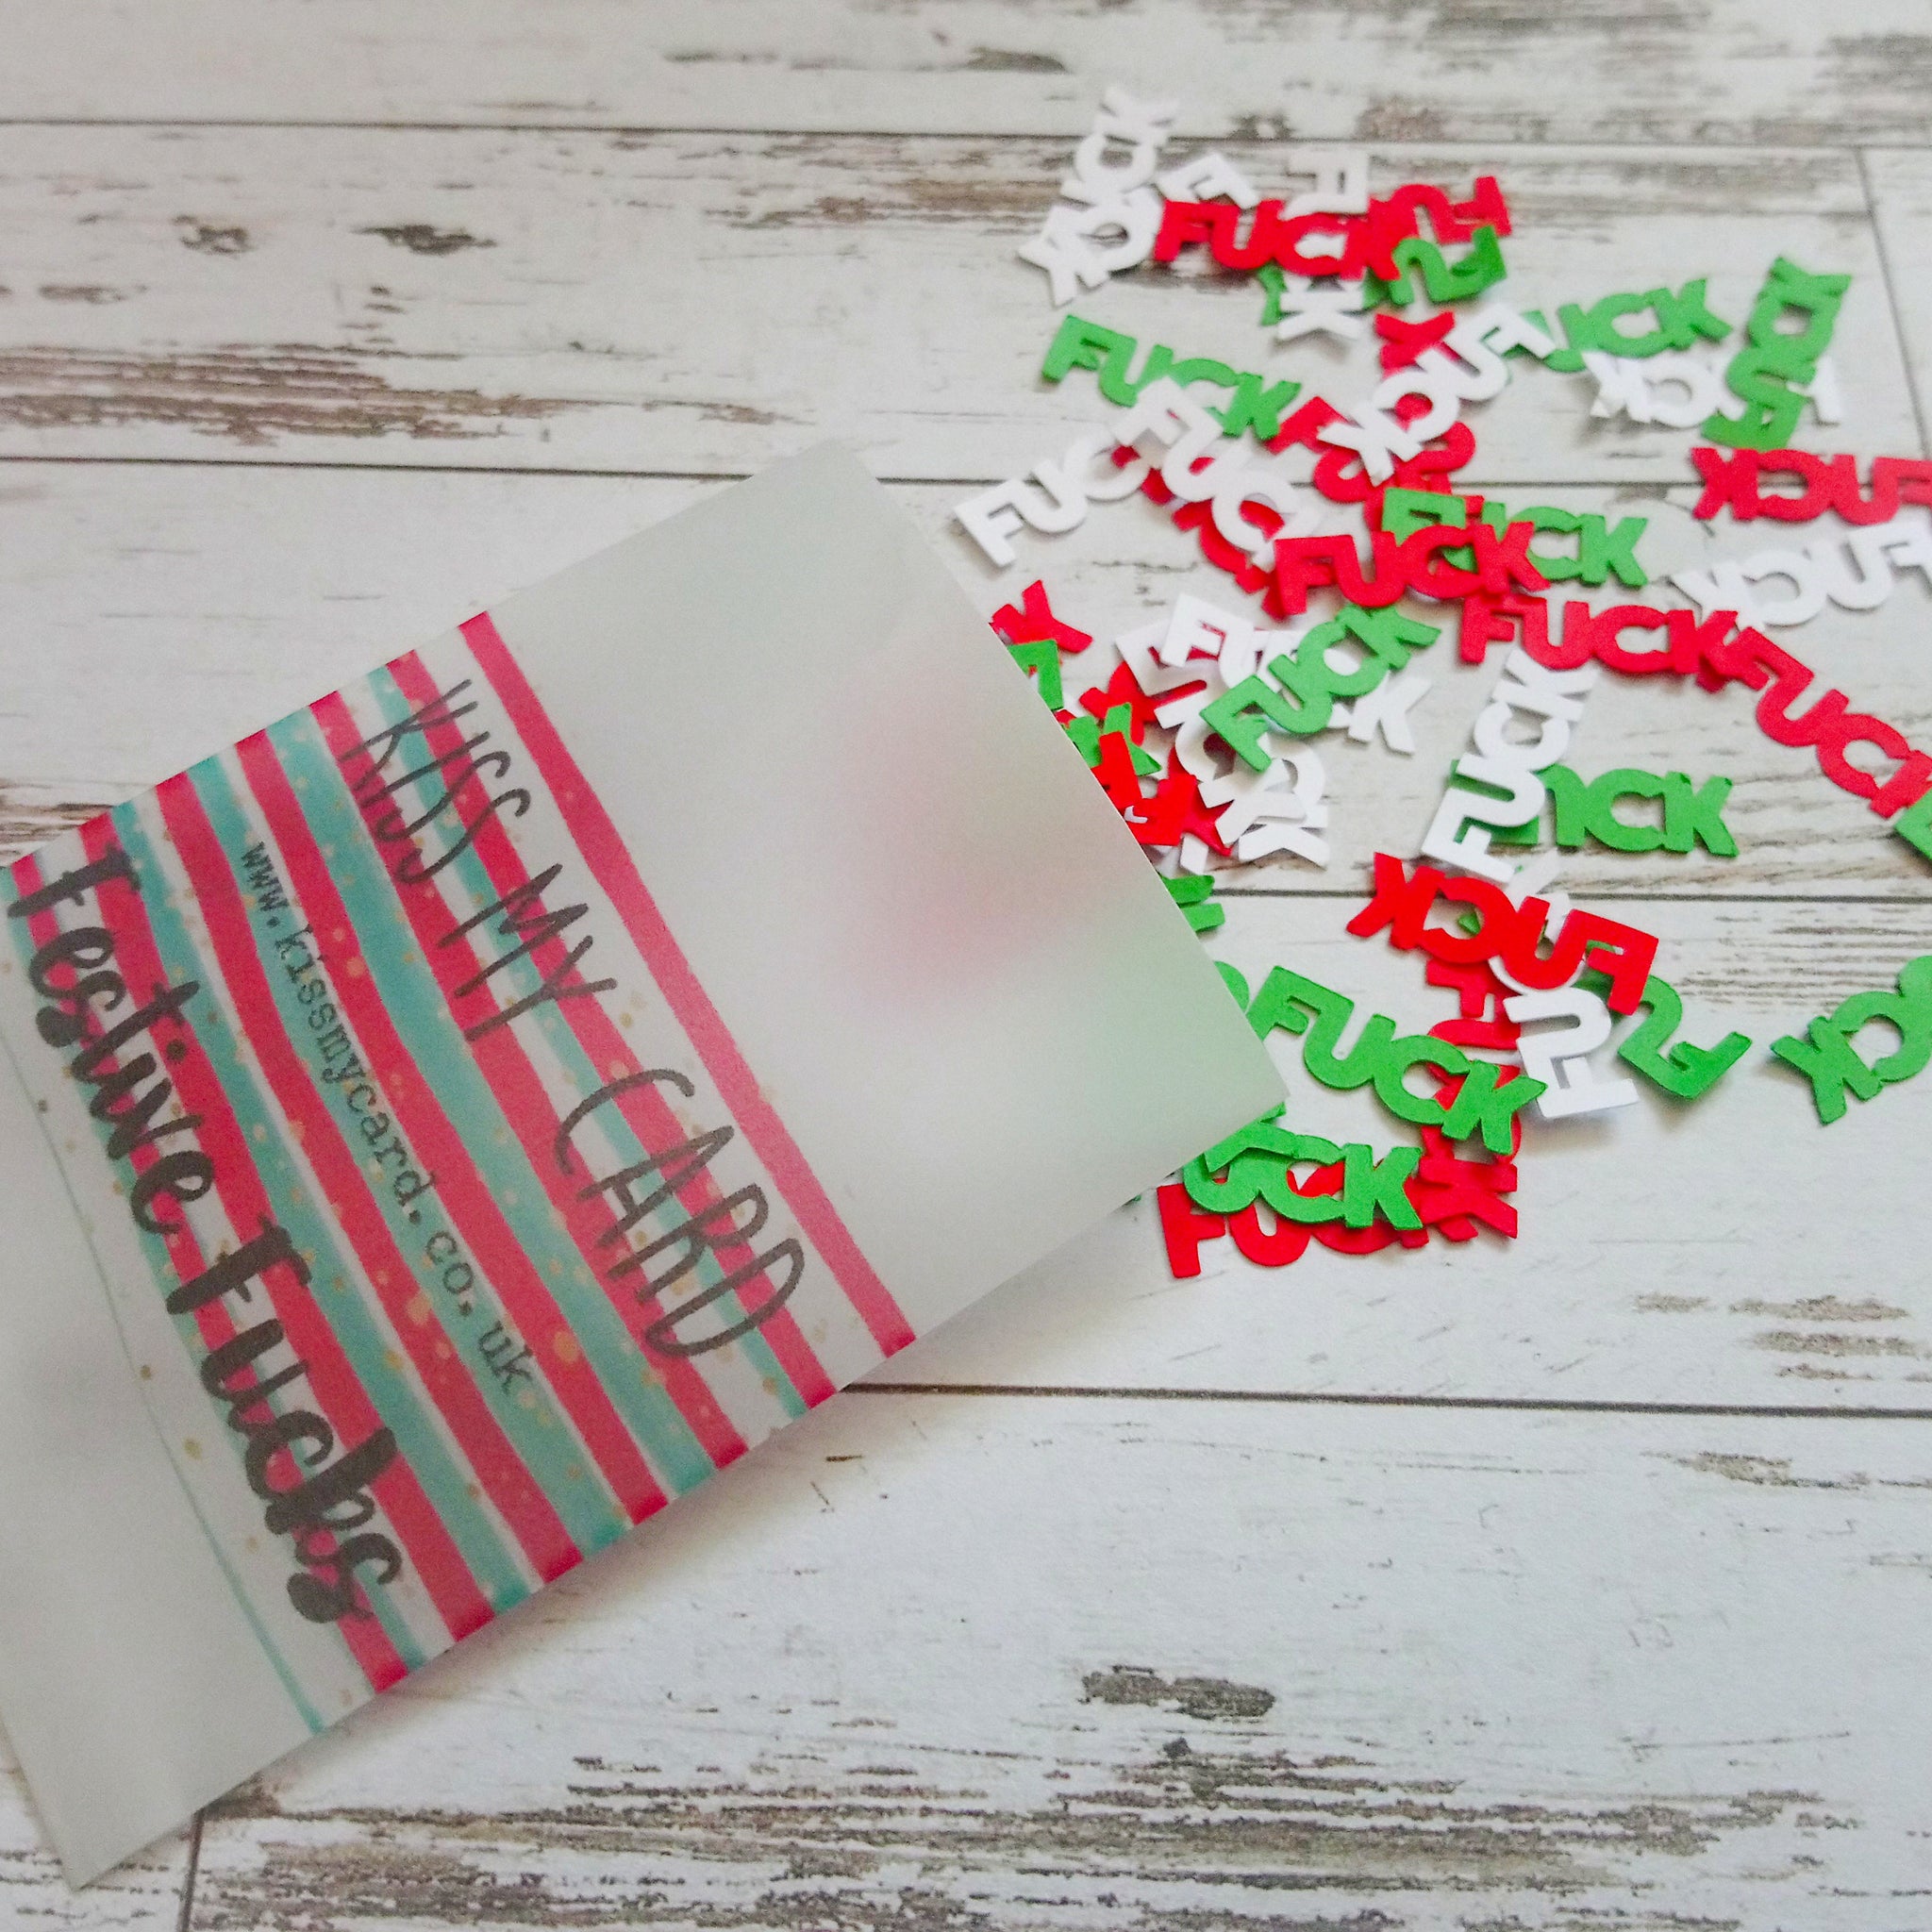 "Festive fucks" swear word confetti - 50 pieces - Christmas colours